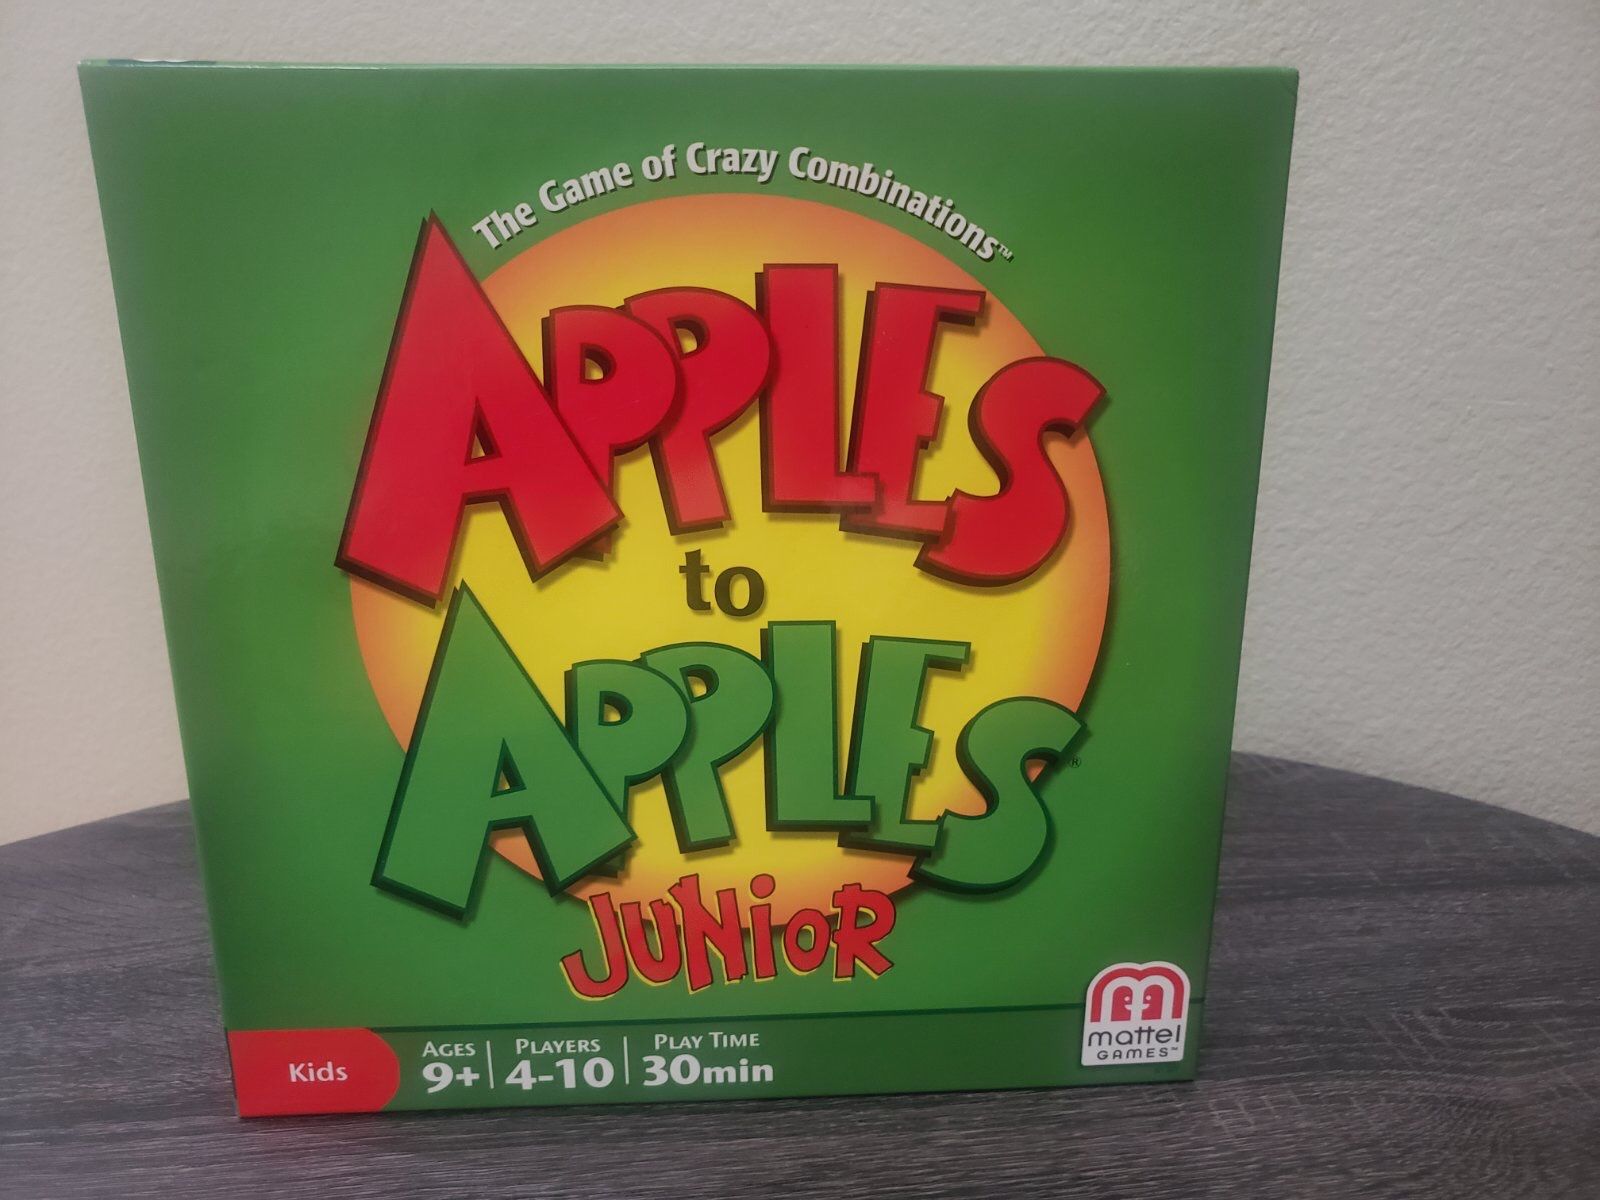 Mattel games, Apples to Apples Junior.